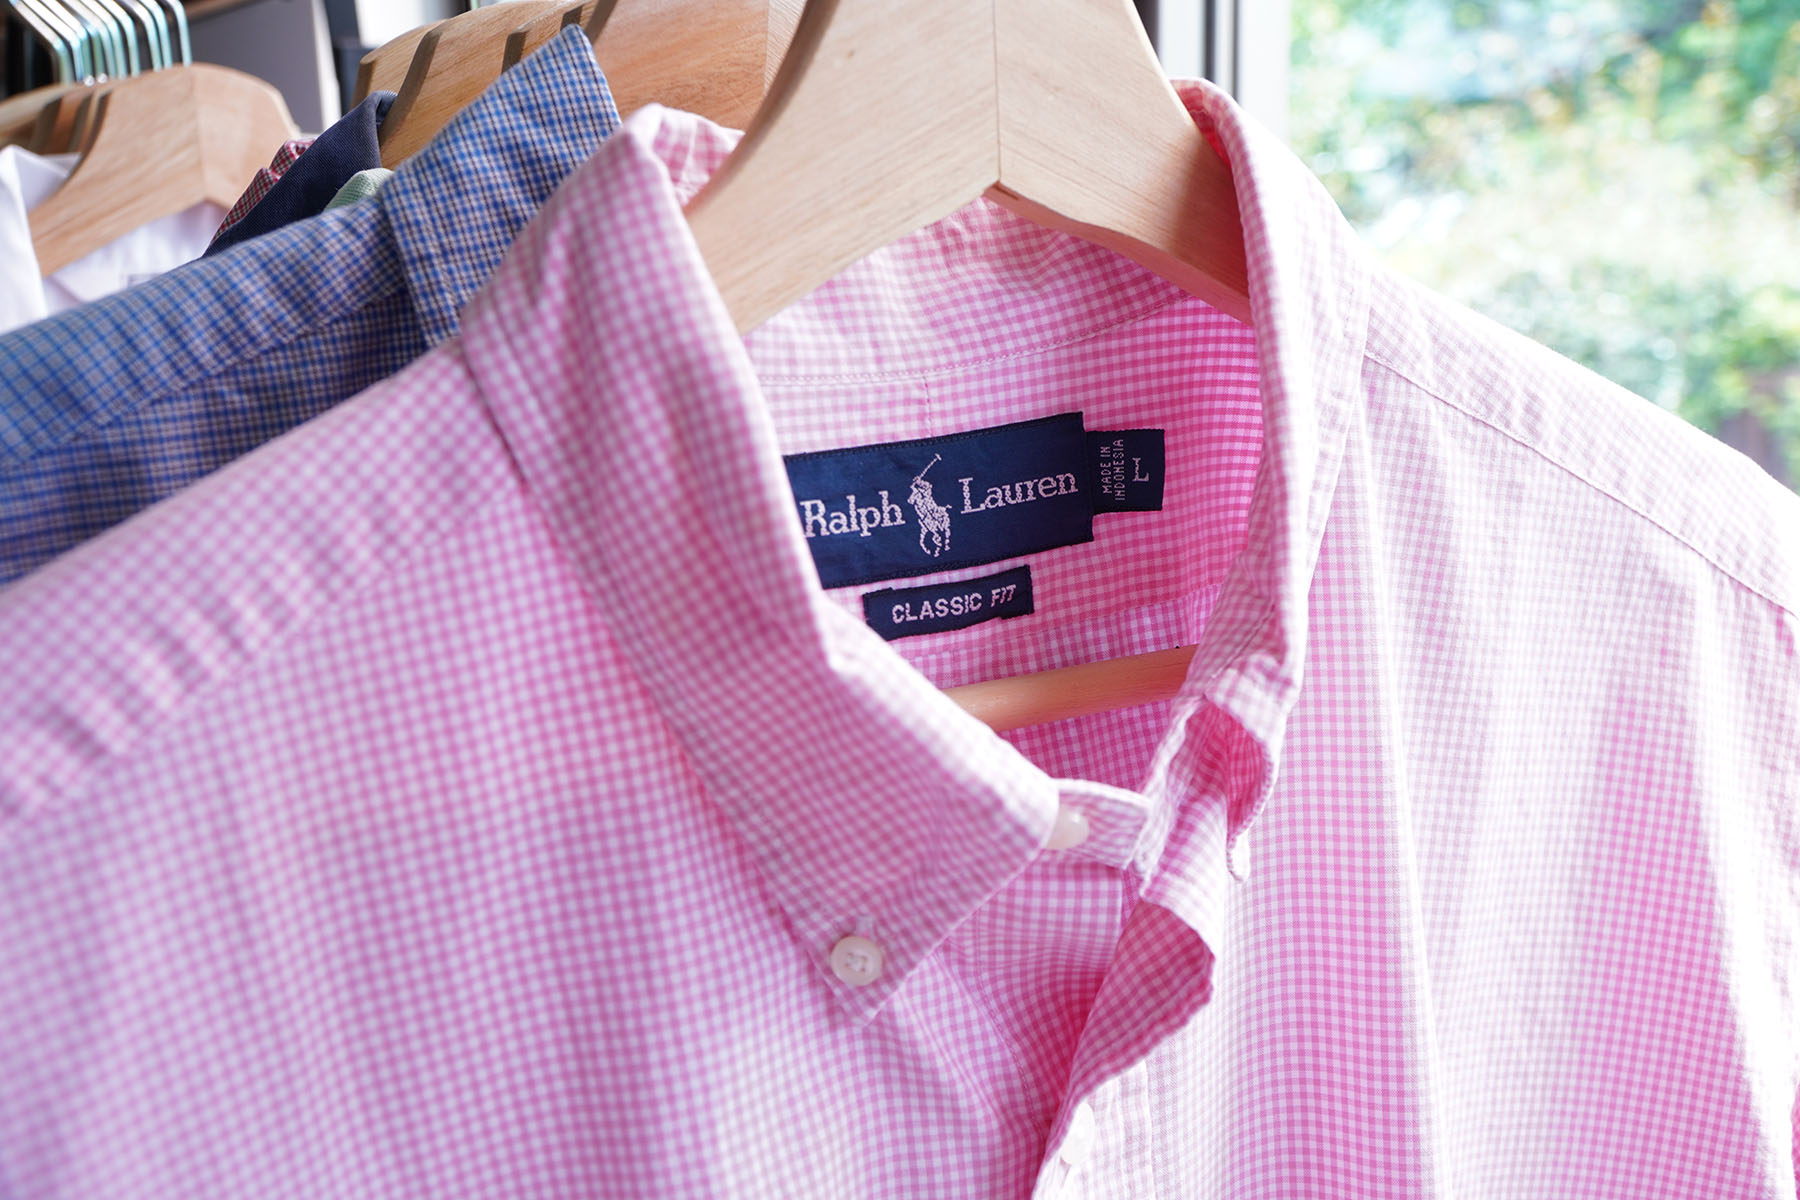 OLD POLO RALPH LAUREN "short sleeve shirts" pink plaid